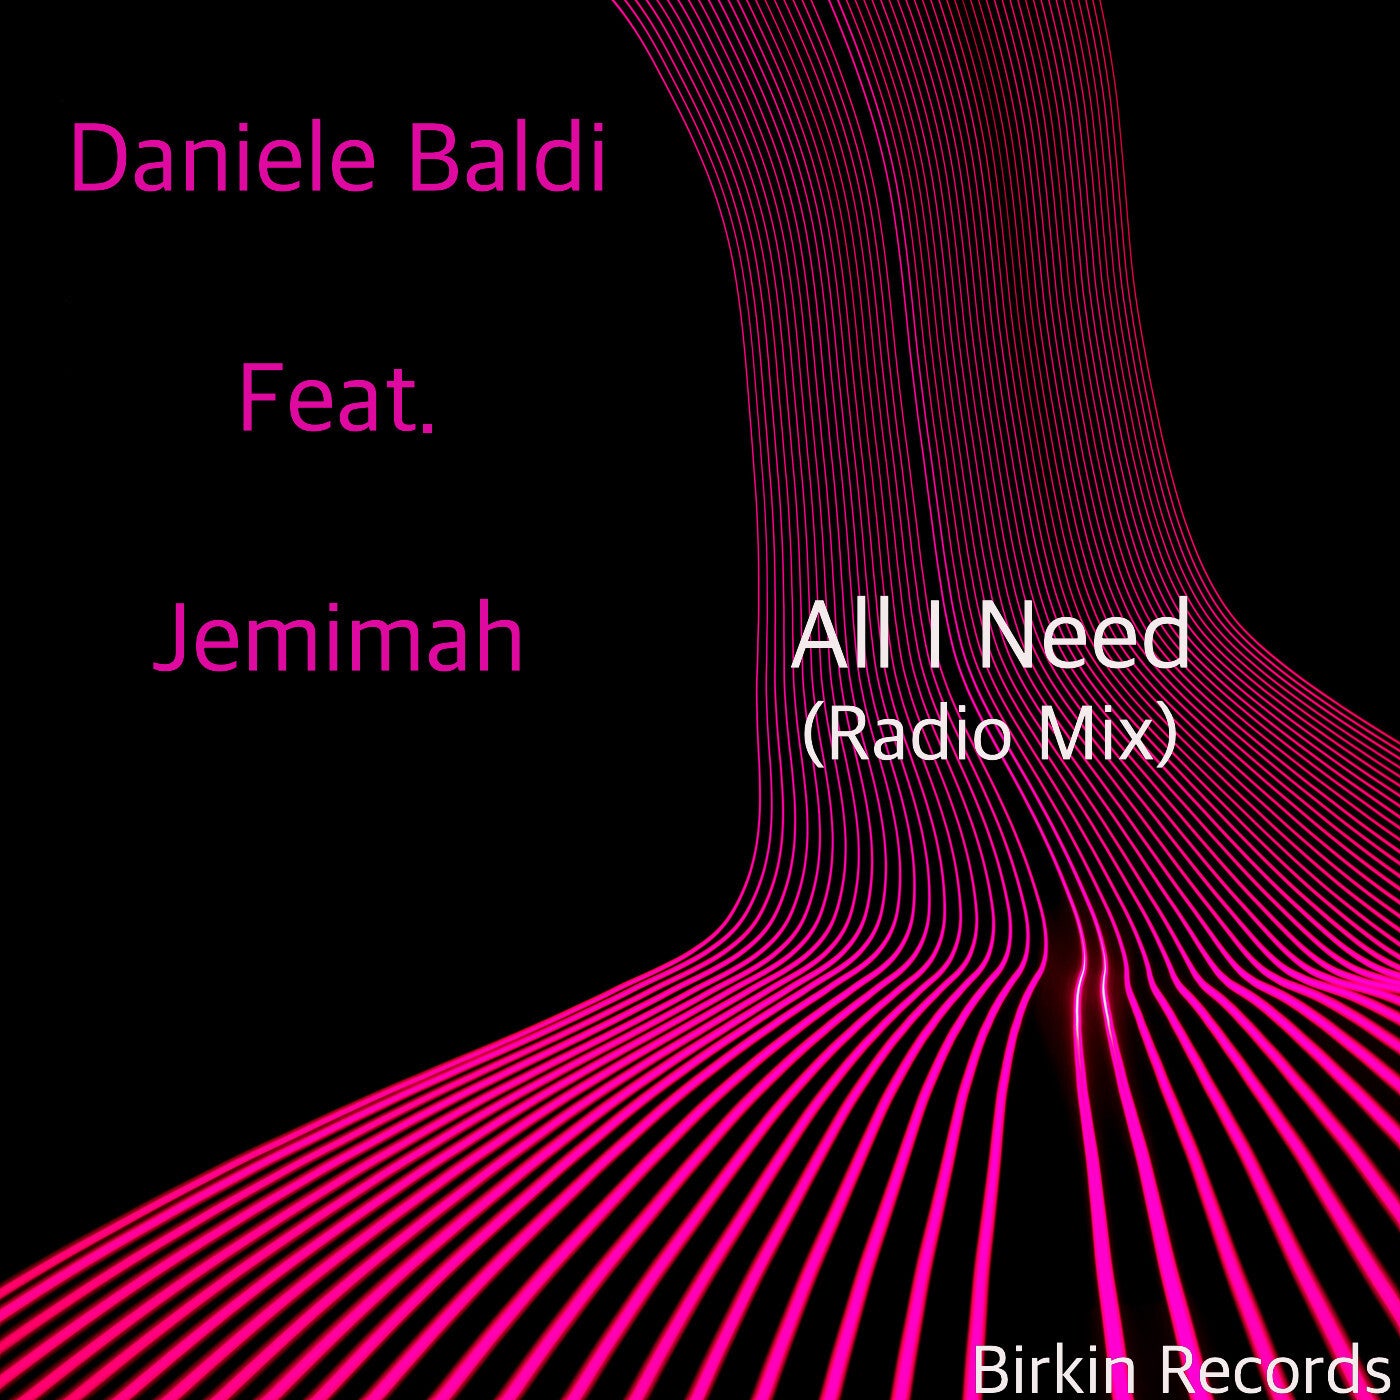 All I Need (Radio Mix) (feat. Jemimah)